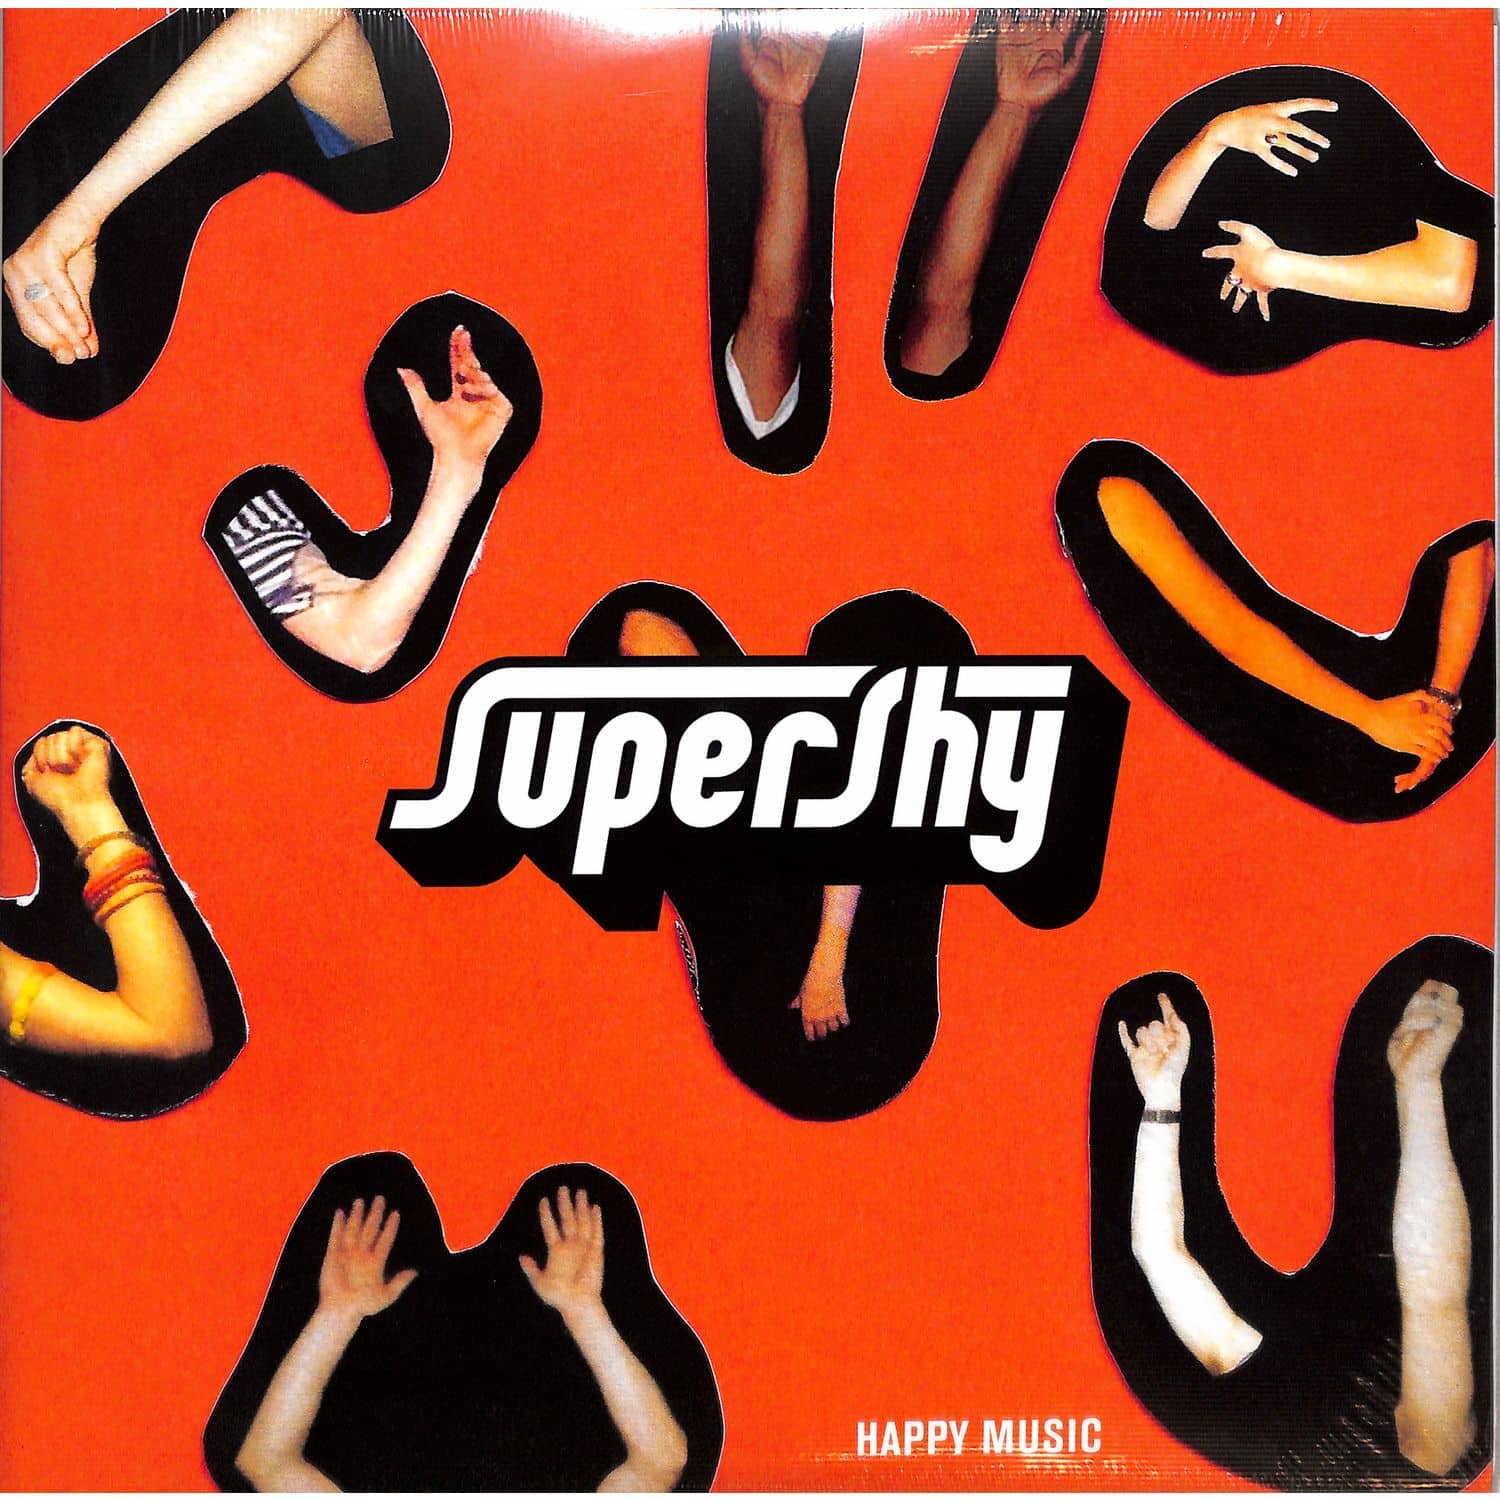 Supershy - HAPPY MUSIC 